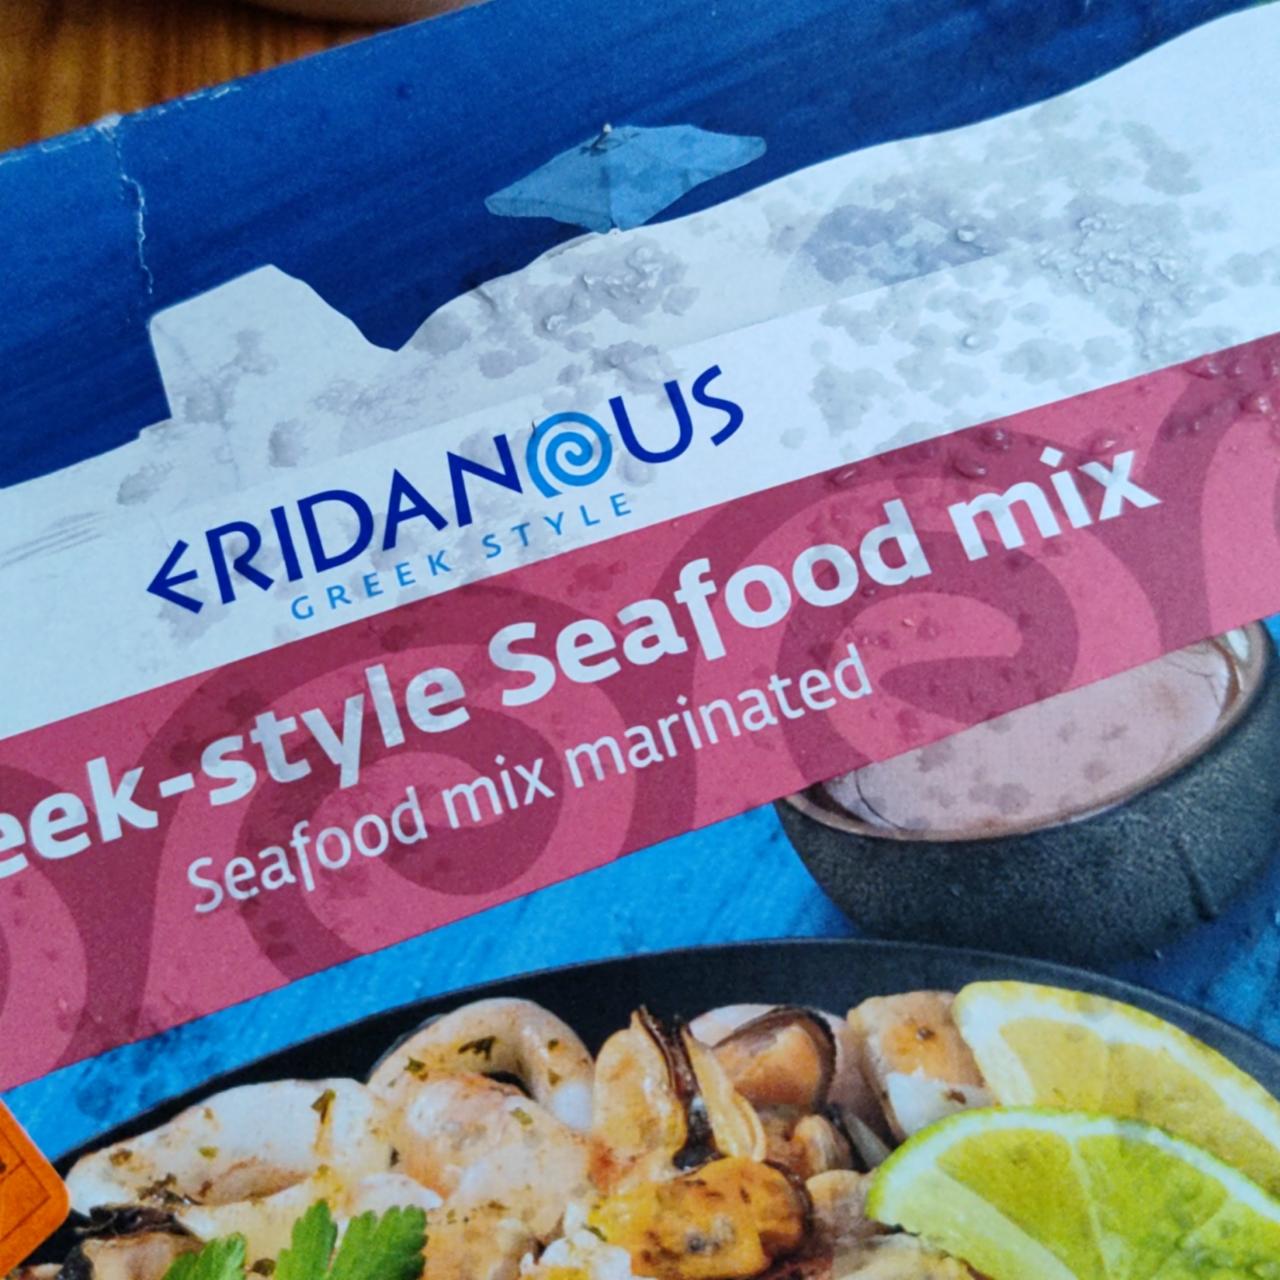 Фото - Greek-style seafood mix Eridanous